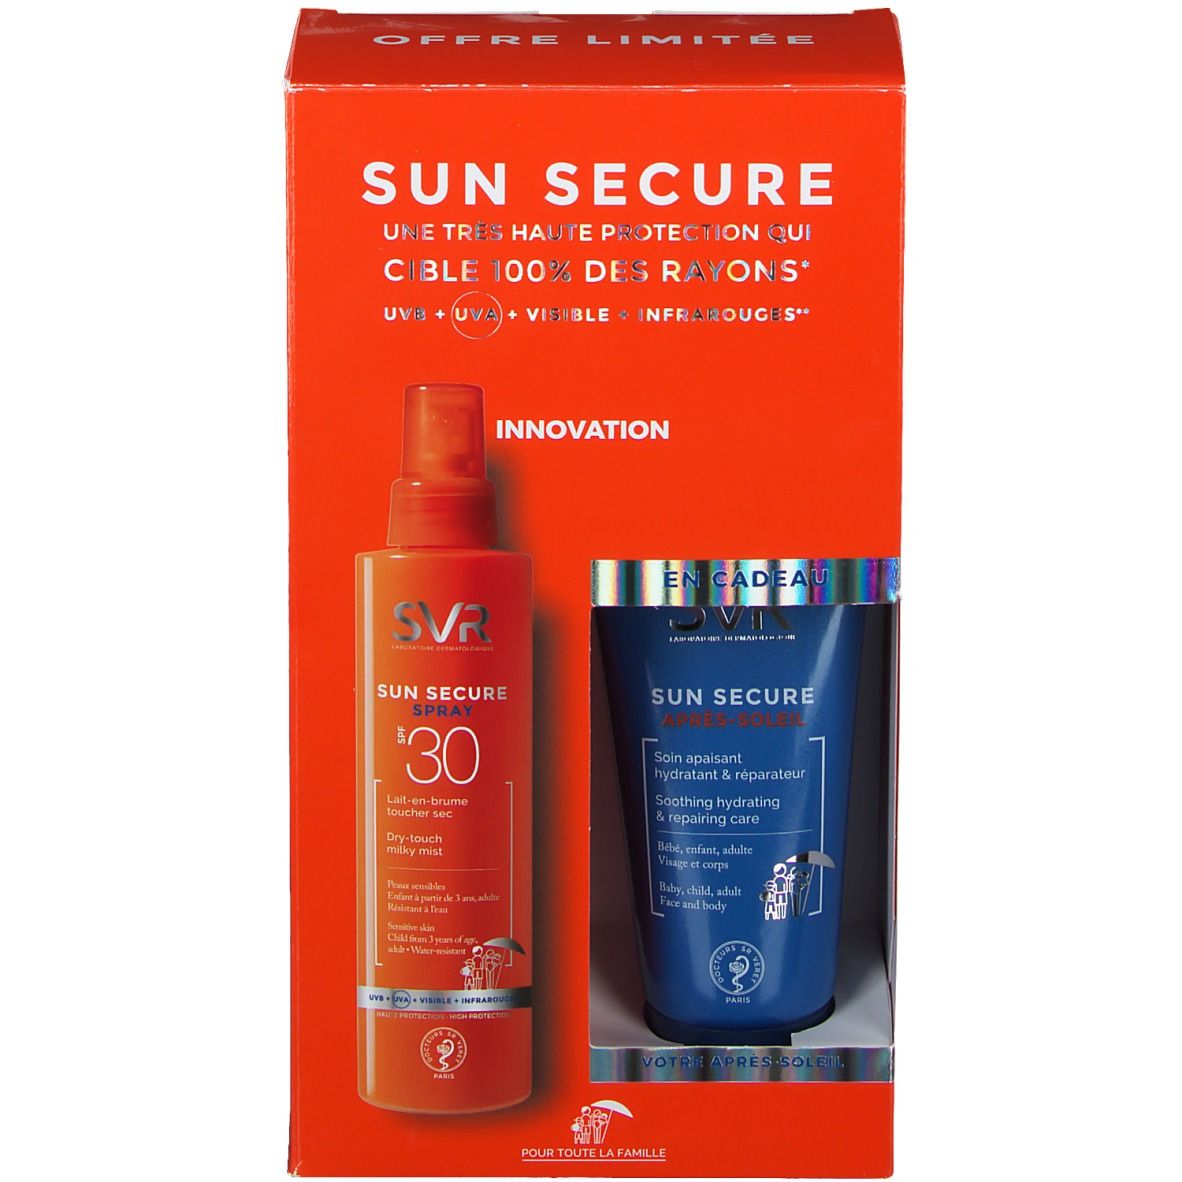 SVR Sun Secure Spray SPF30 + Sun Secure Après Soleil